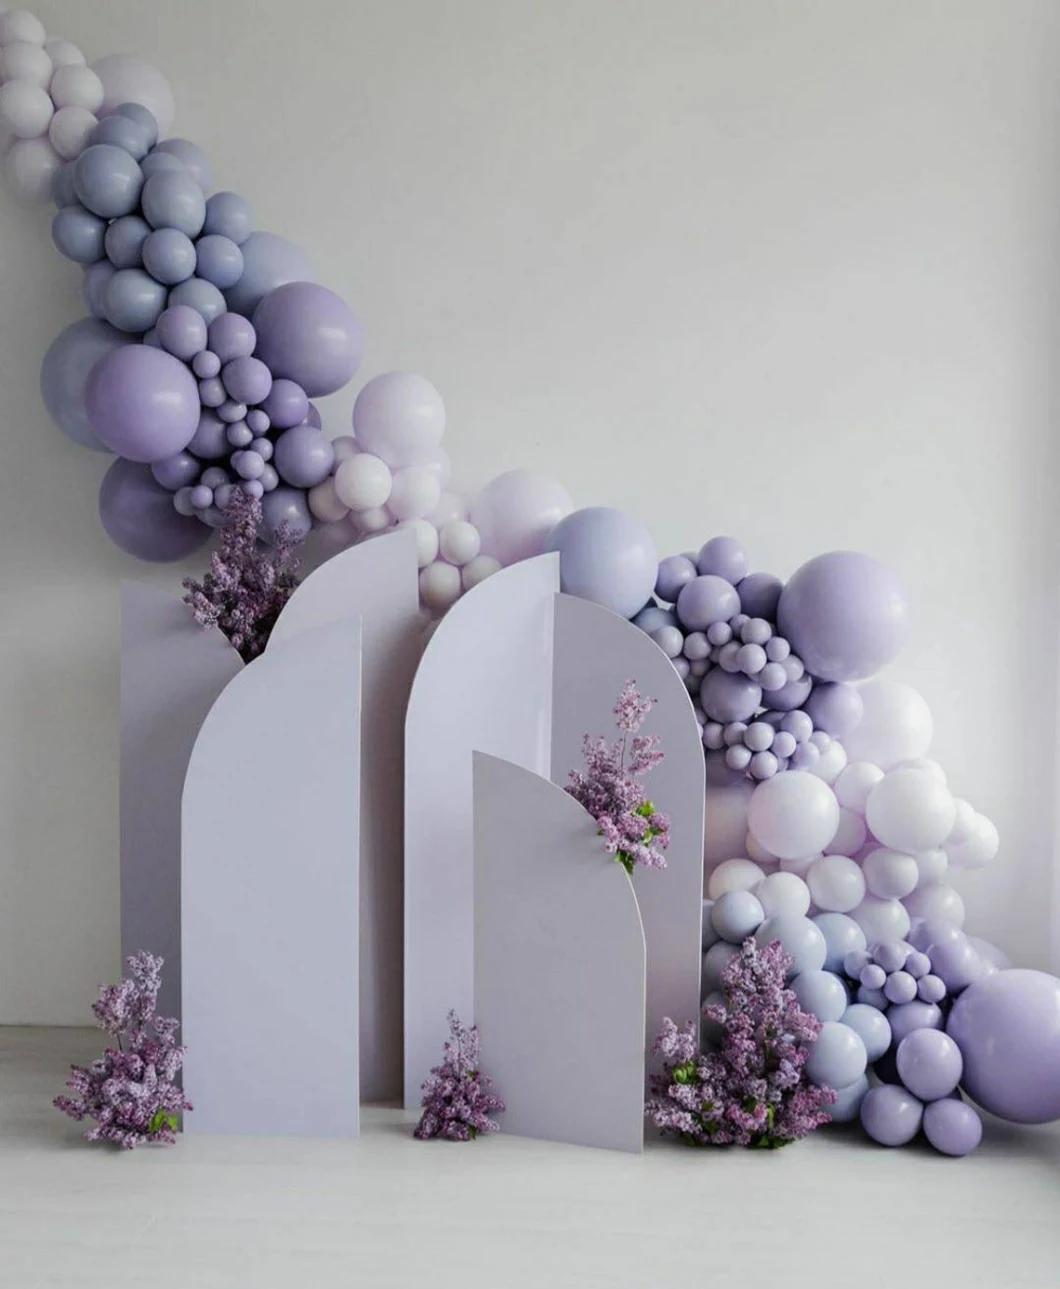 6 Piece Acrylic Backdrop Board Bridal Wedding Birthday Party Props New Trendy Decor